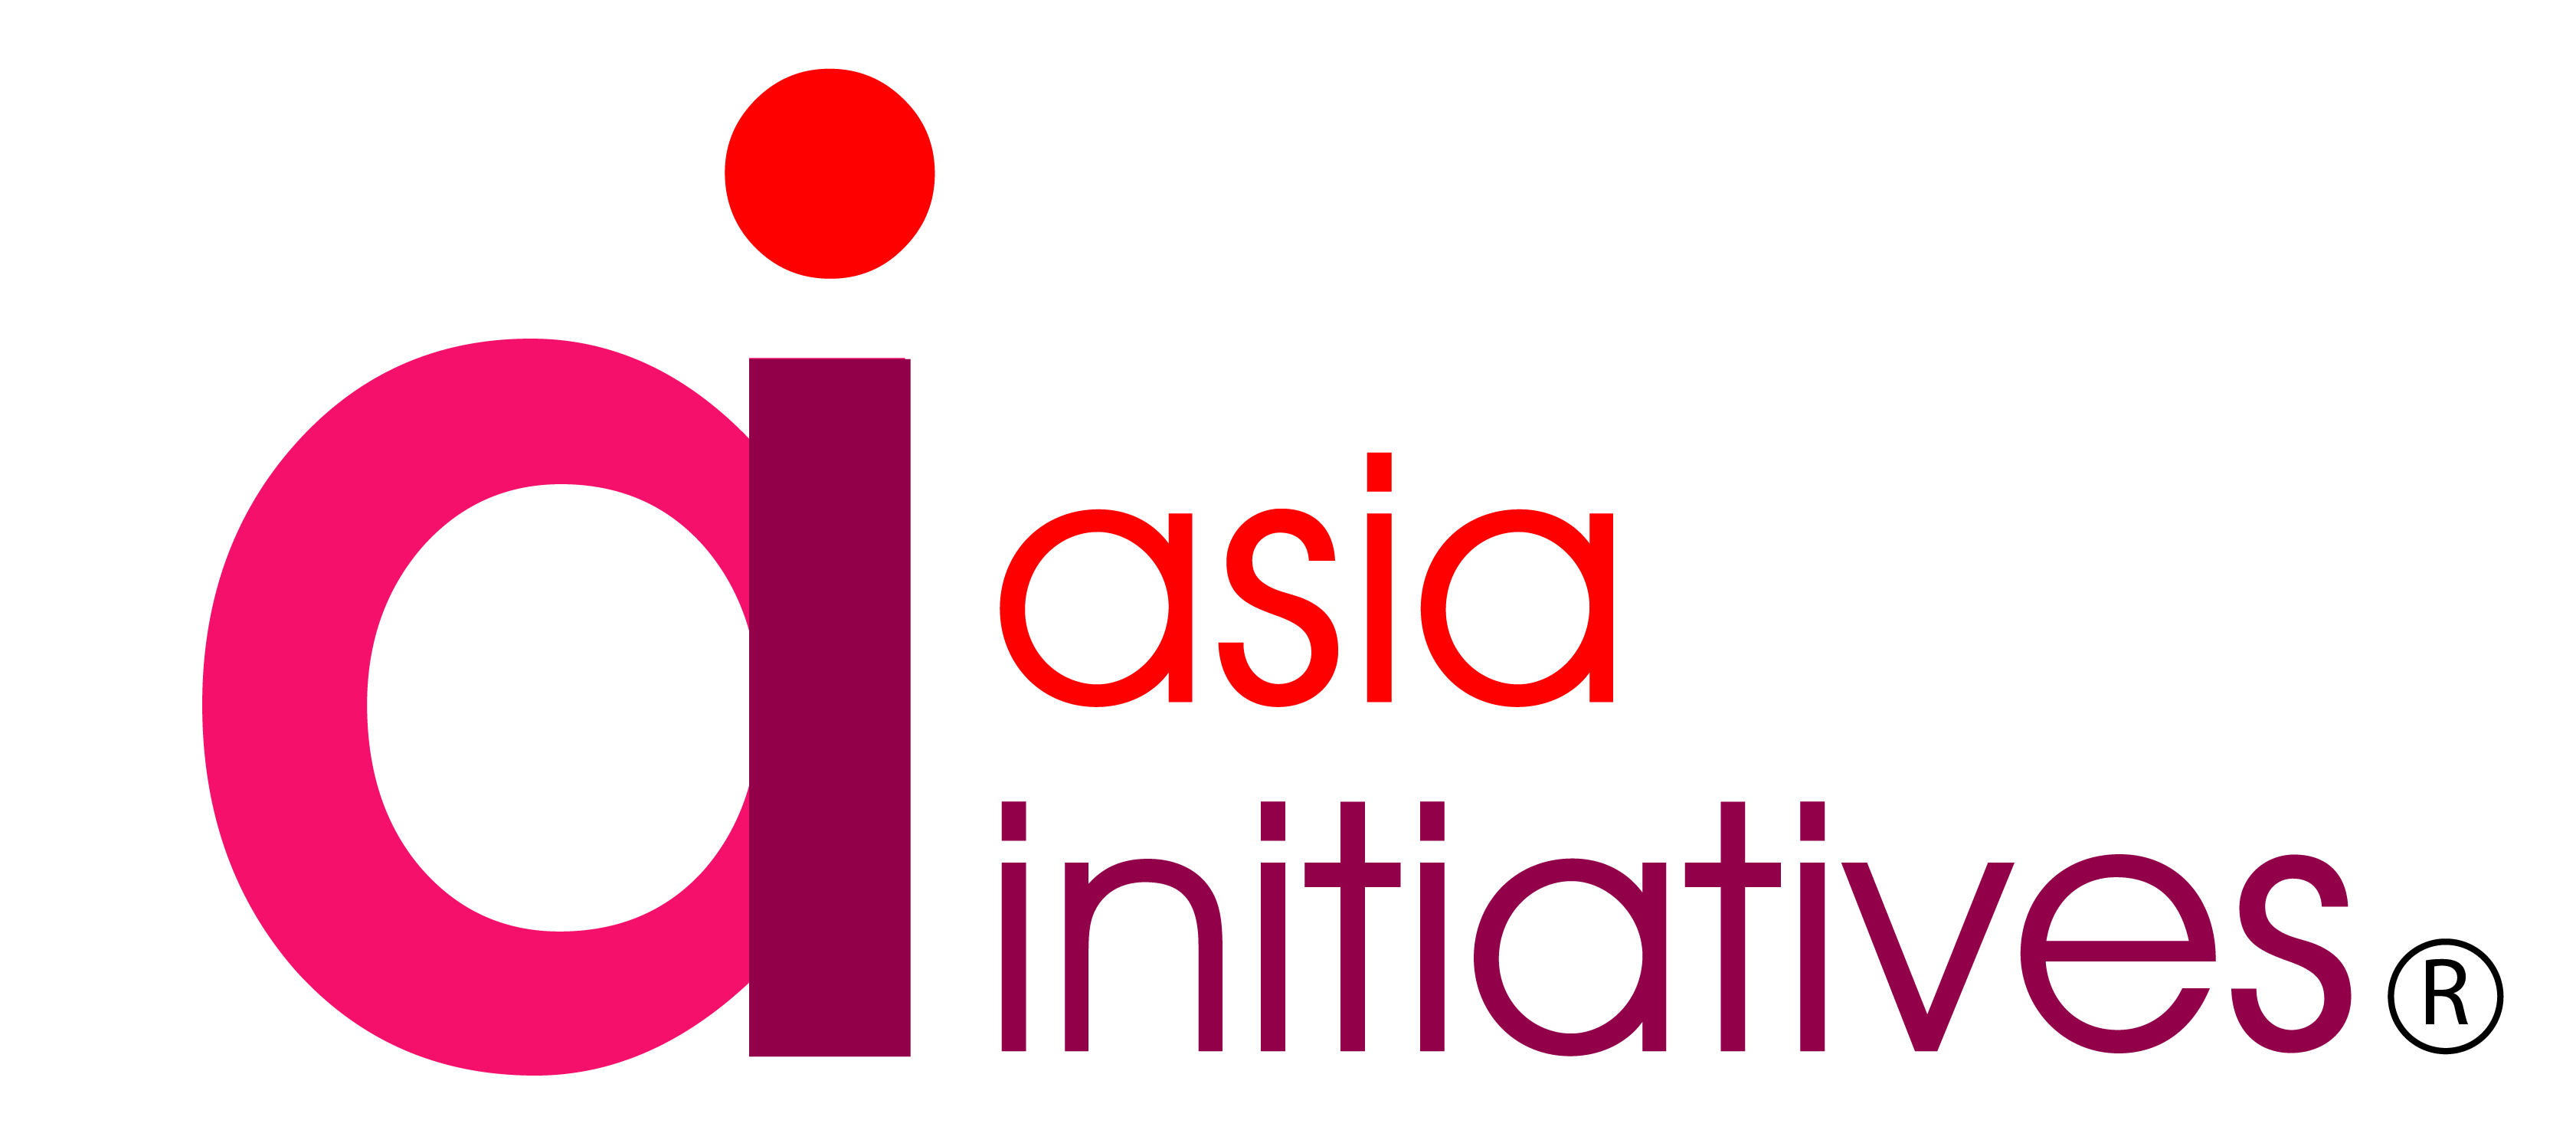 Asia Initiatives Logo Image.